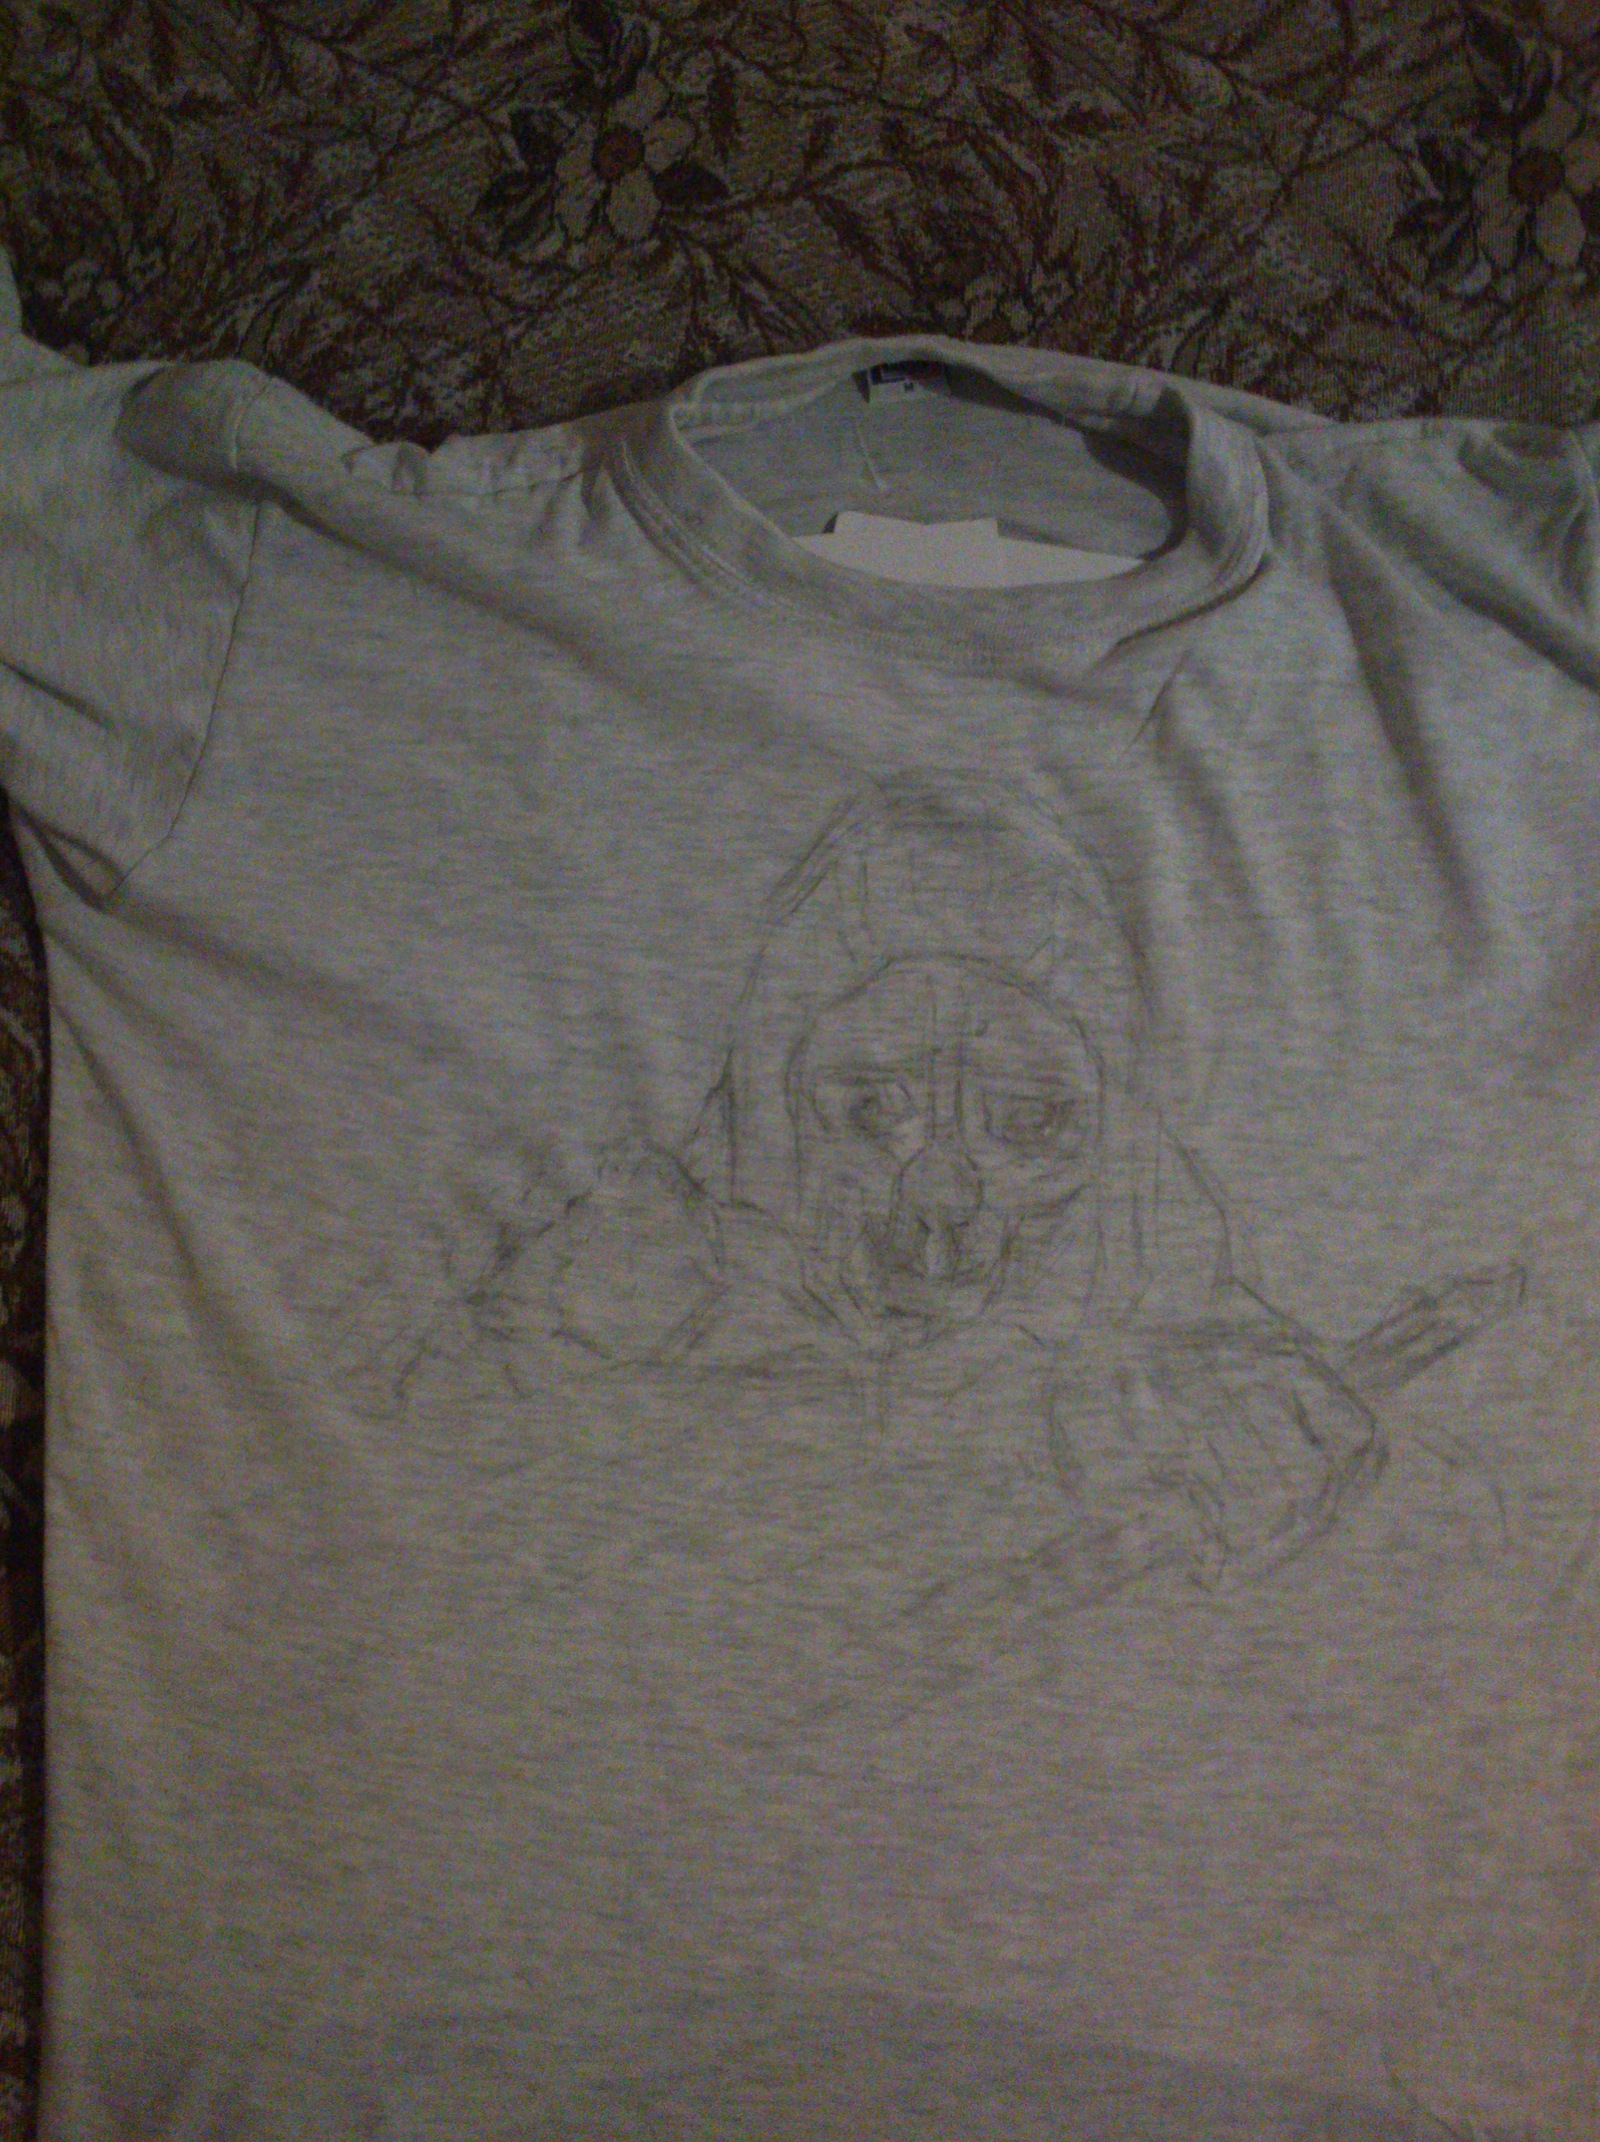 Corvo Attano on a T-shirt - My, Acrylic, Dishonored, Corvo Attano, , T-shirt, , Longpost, Error